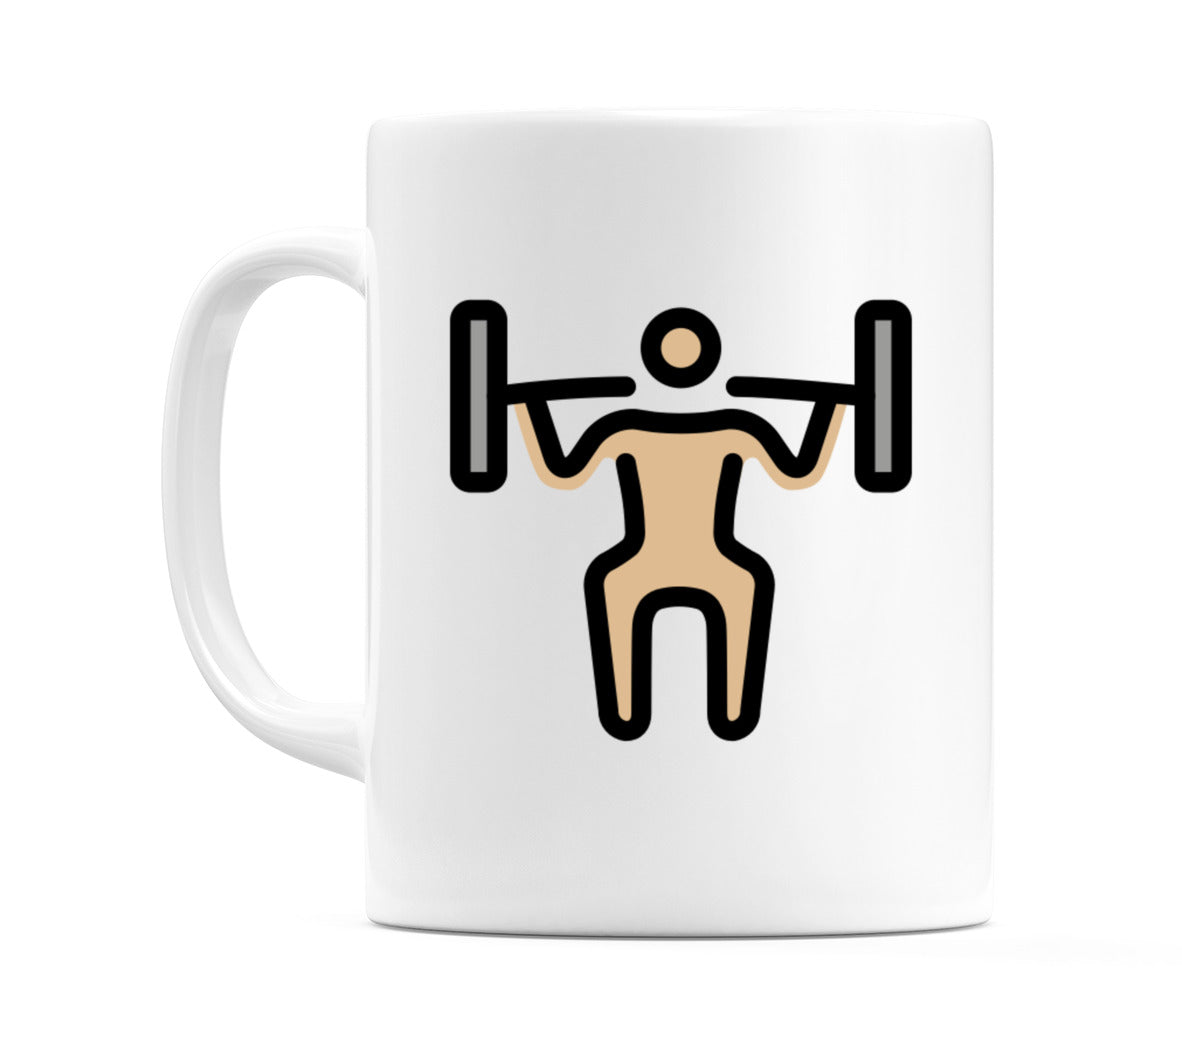 Male Lifting Weights: Medium-Light Skin Tone Emoji Mug